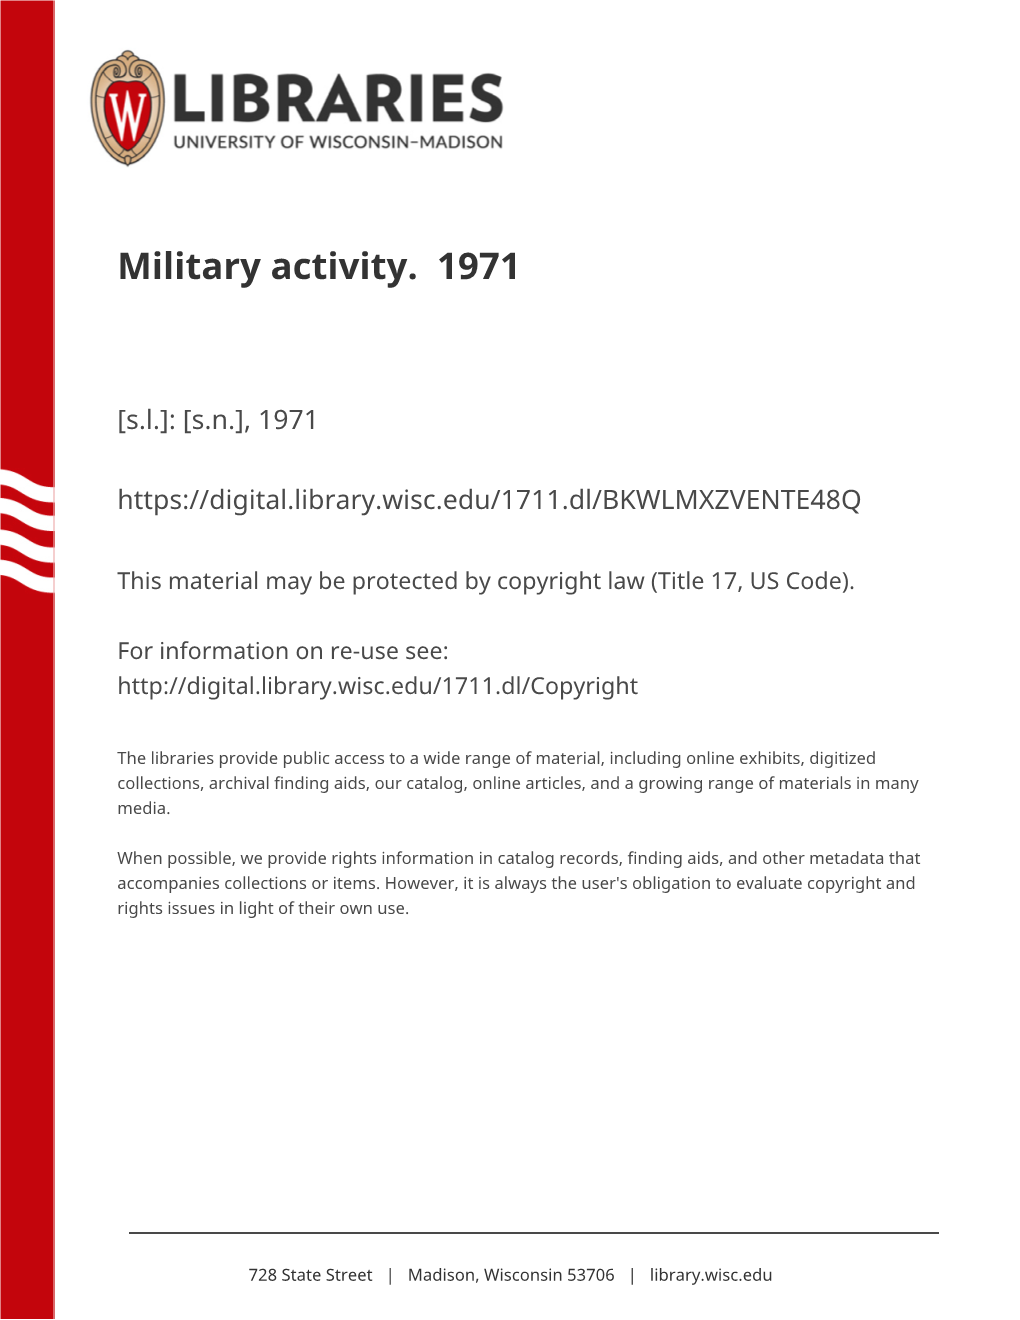 Military Activity. 1971